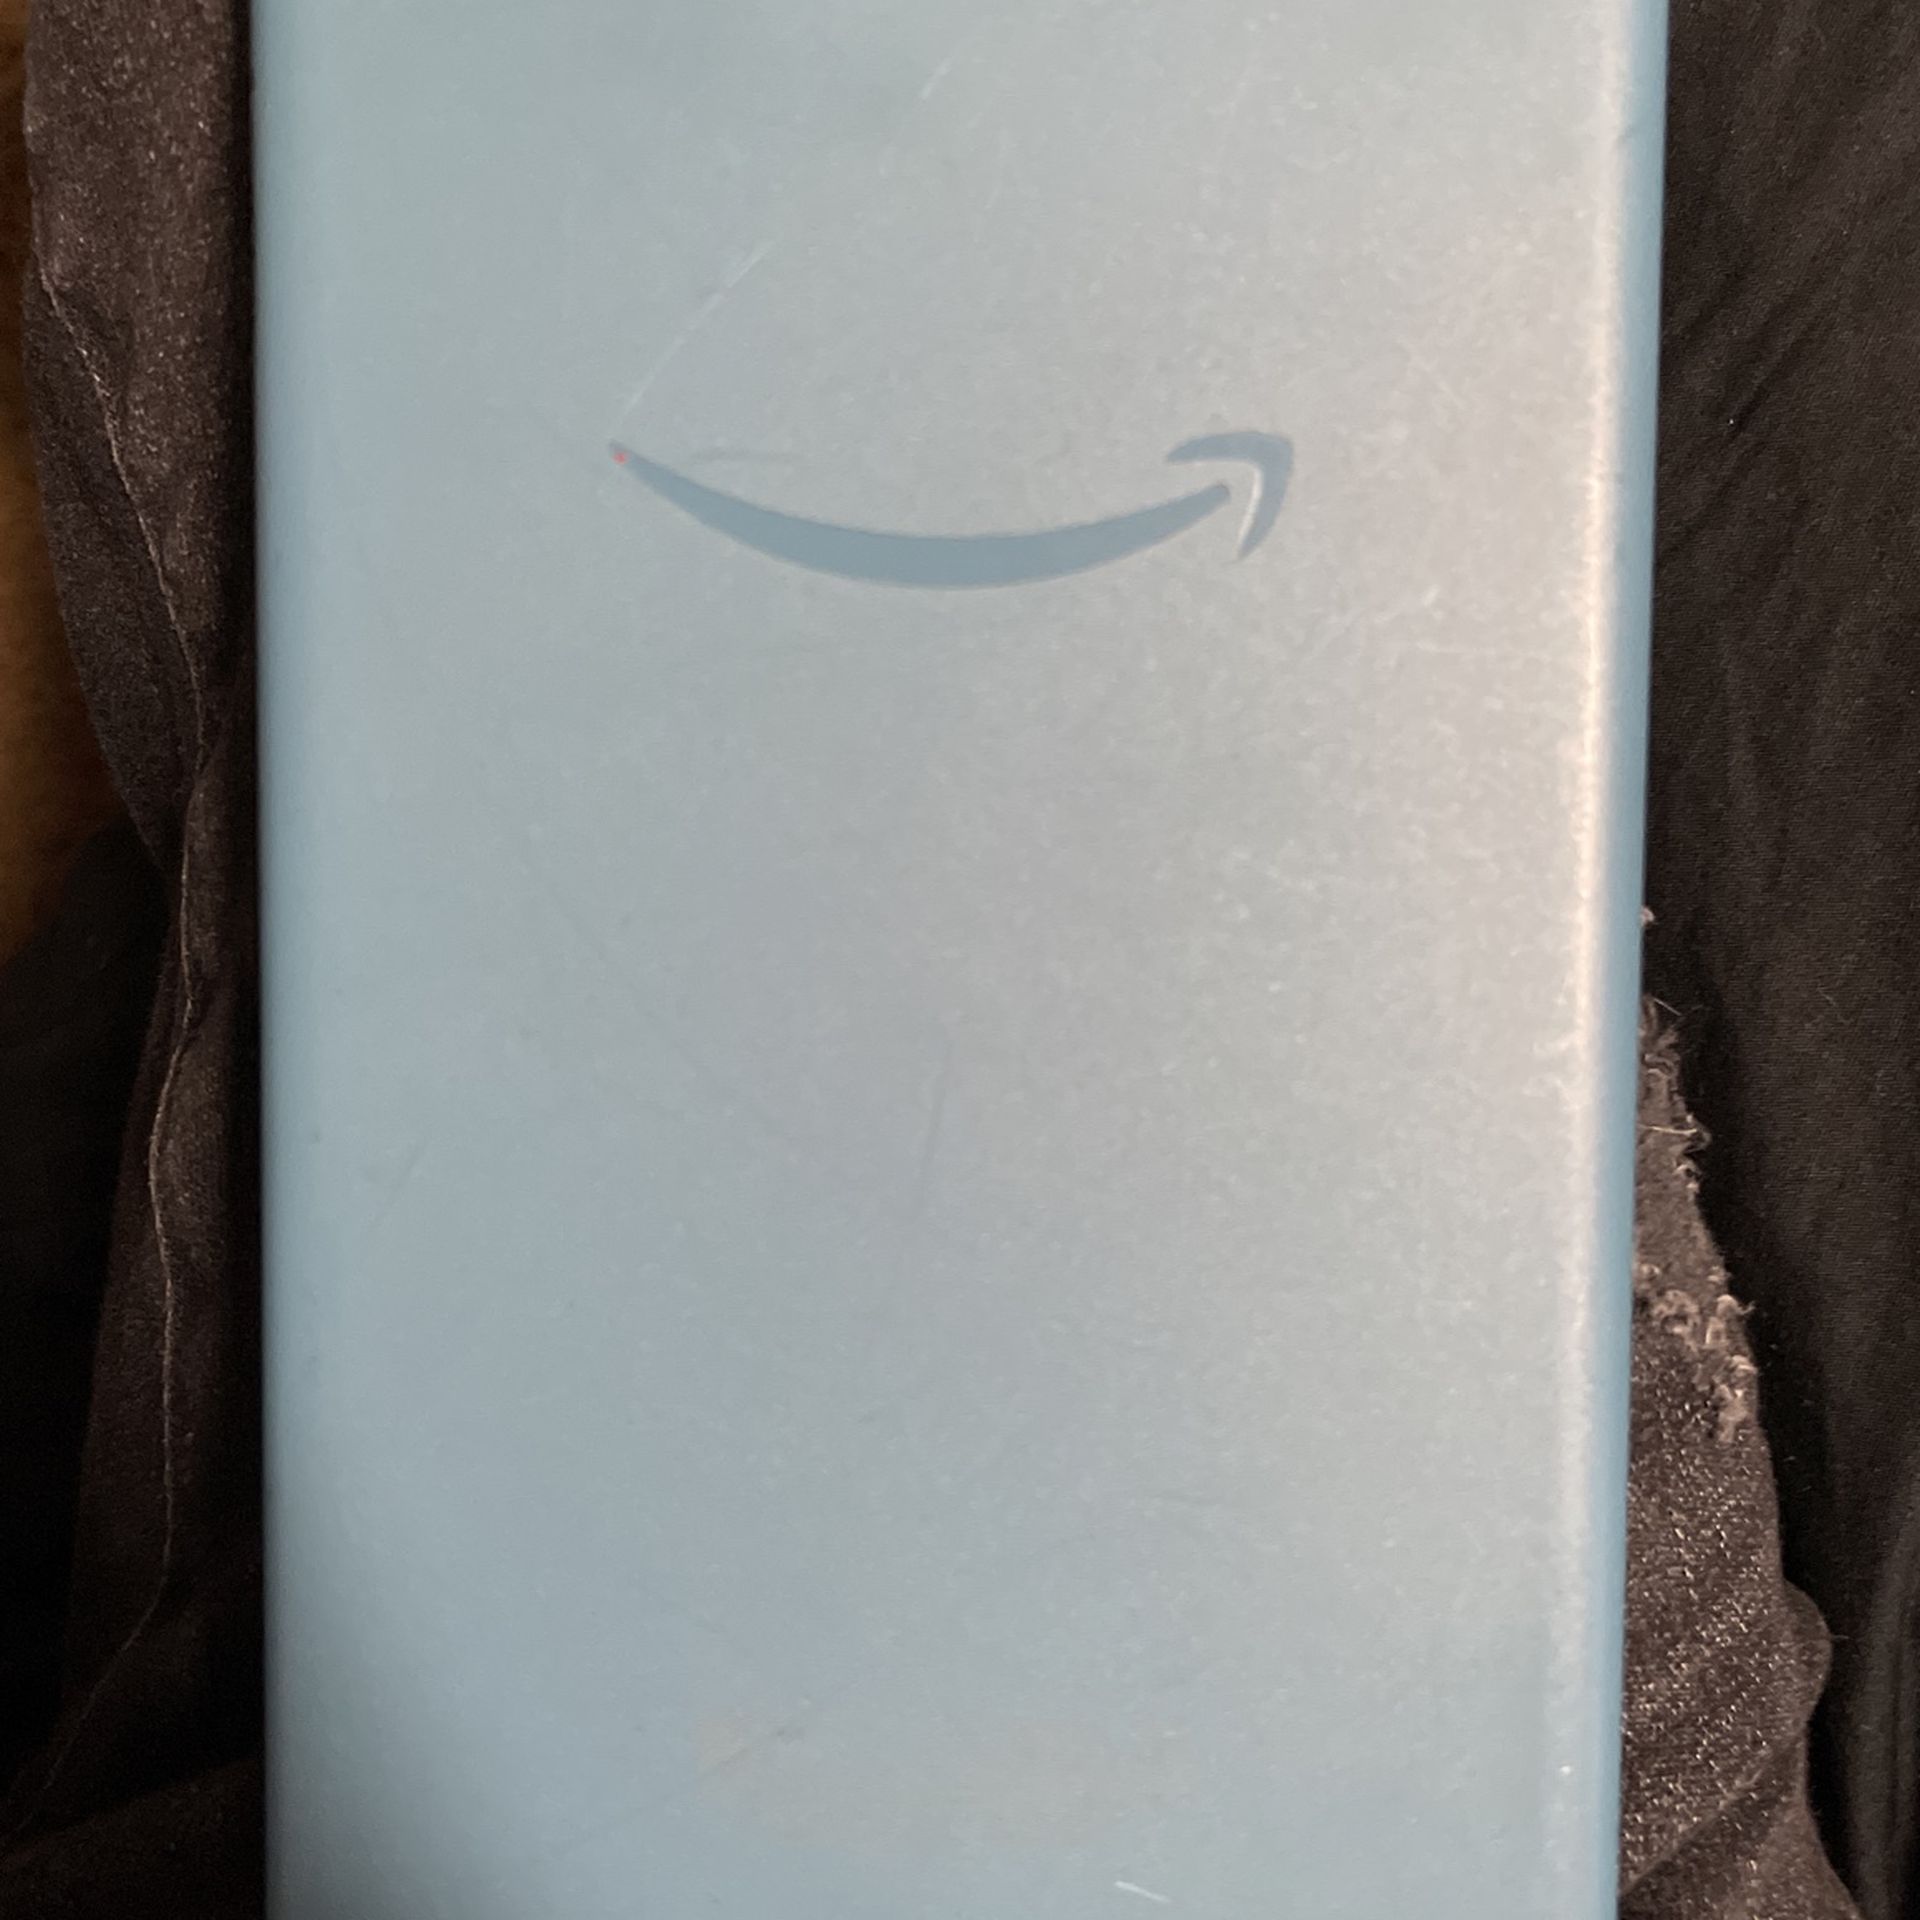 Amazon Fire Tablet 7